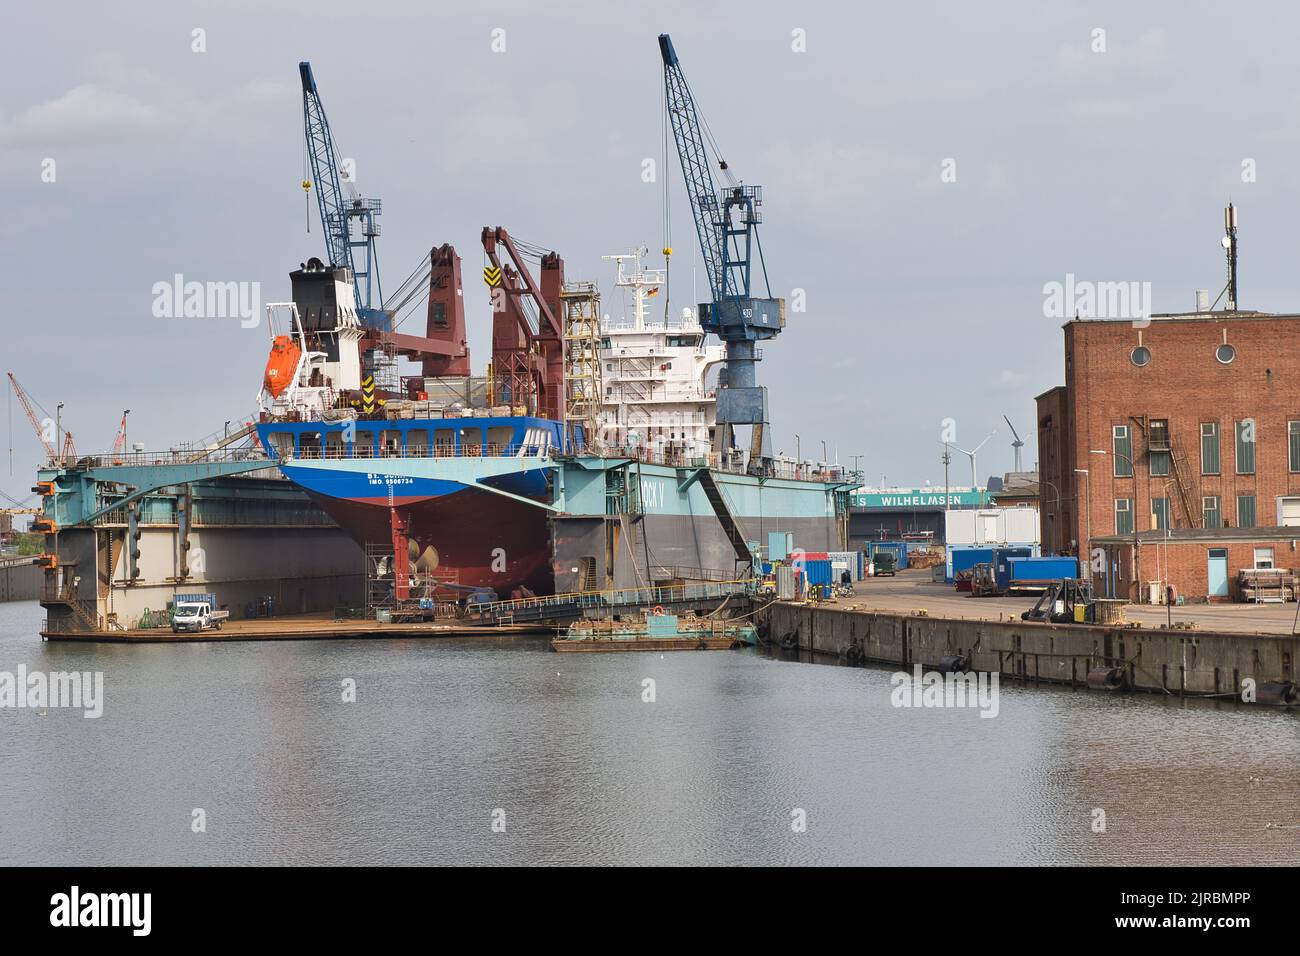 Nordsee, Mare del Nord, Meer, Wasser, acqua, Schiff, nave, Feuerschiff, Fireship, Elba 1, Bremerhaven, Werft, cantiere navale, molo V, Foto Stock